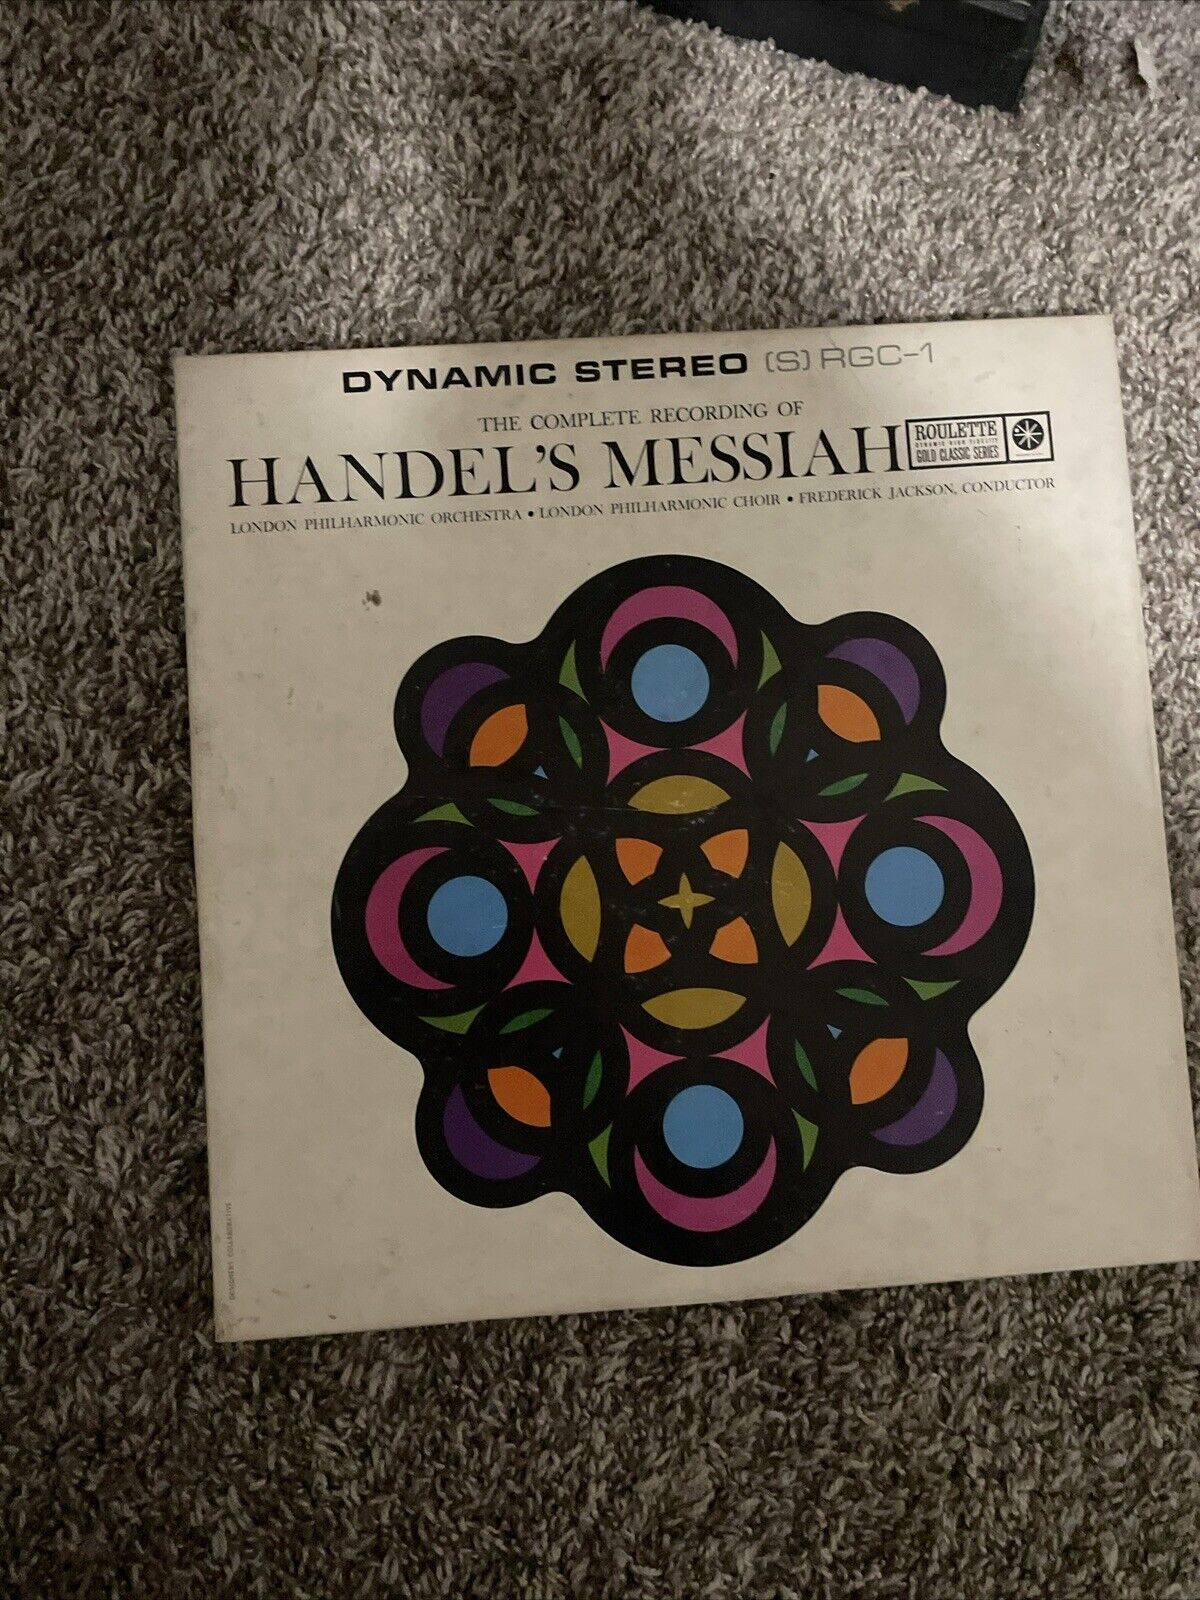 The Complete Recordings of Handel's Messiah RGC-1 Vintage Vinyl